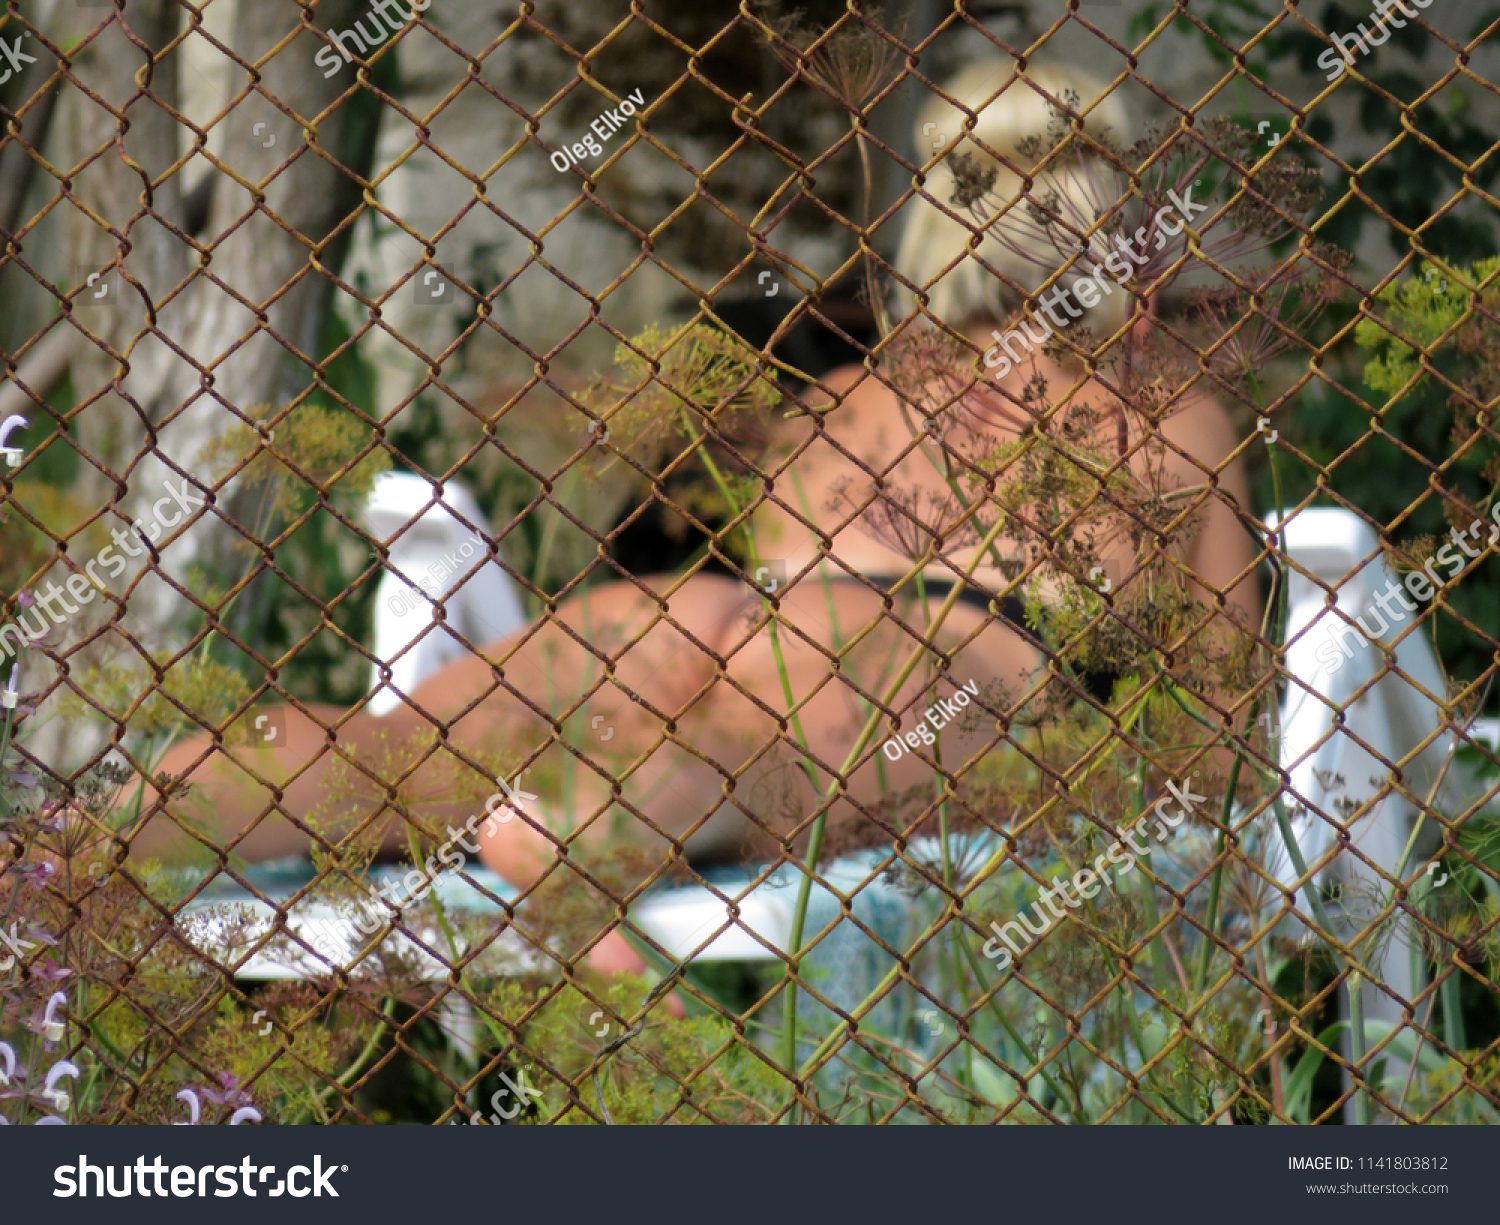 voyeur over the fence Porn Pics Hd